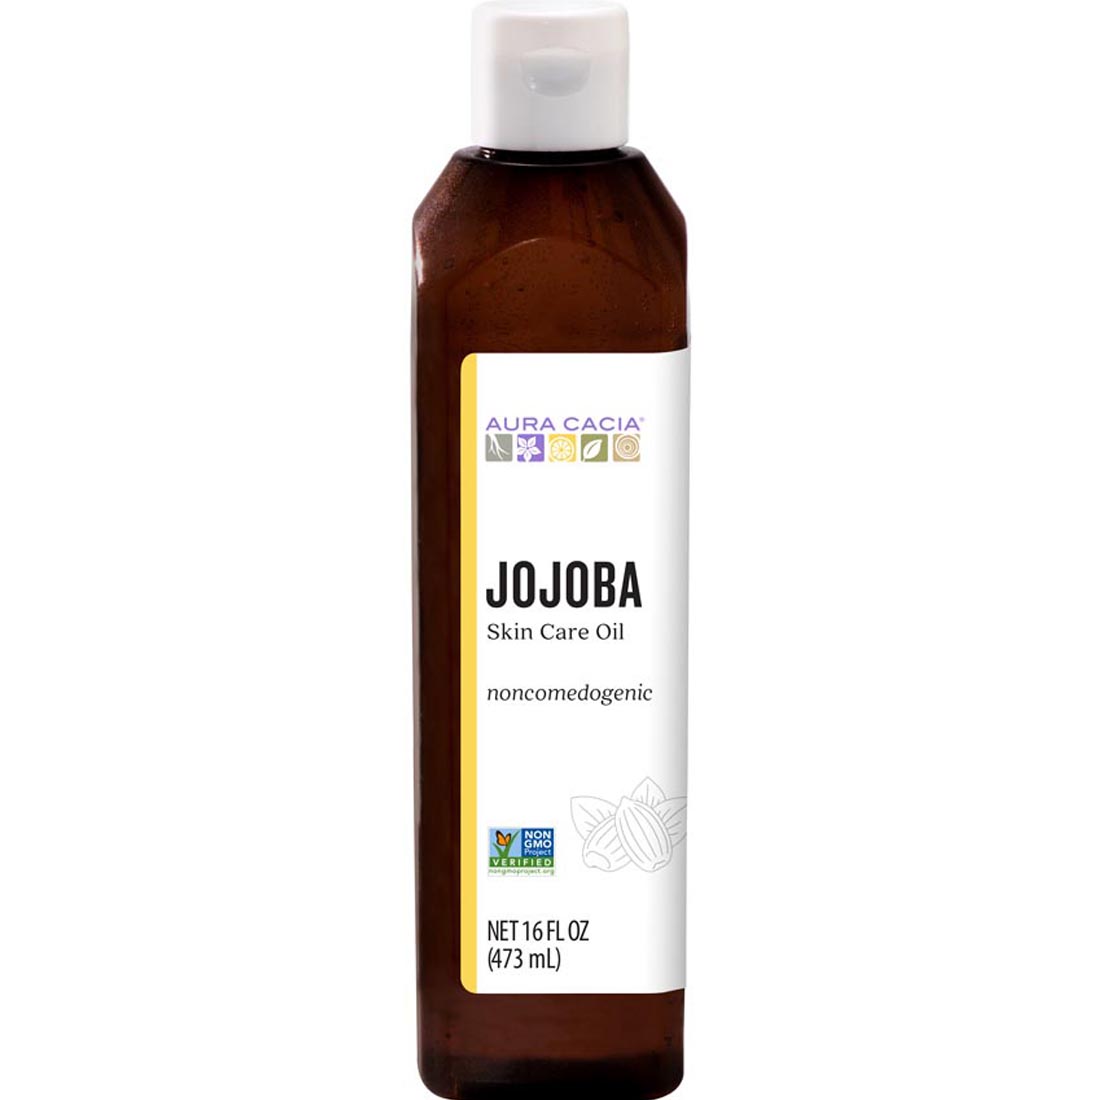 Aura Cacia Jojoba Pure Skin Care Oil, 473ml